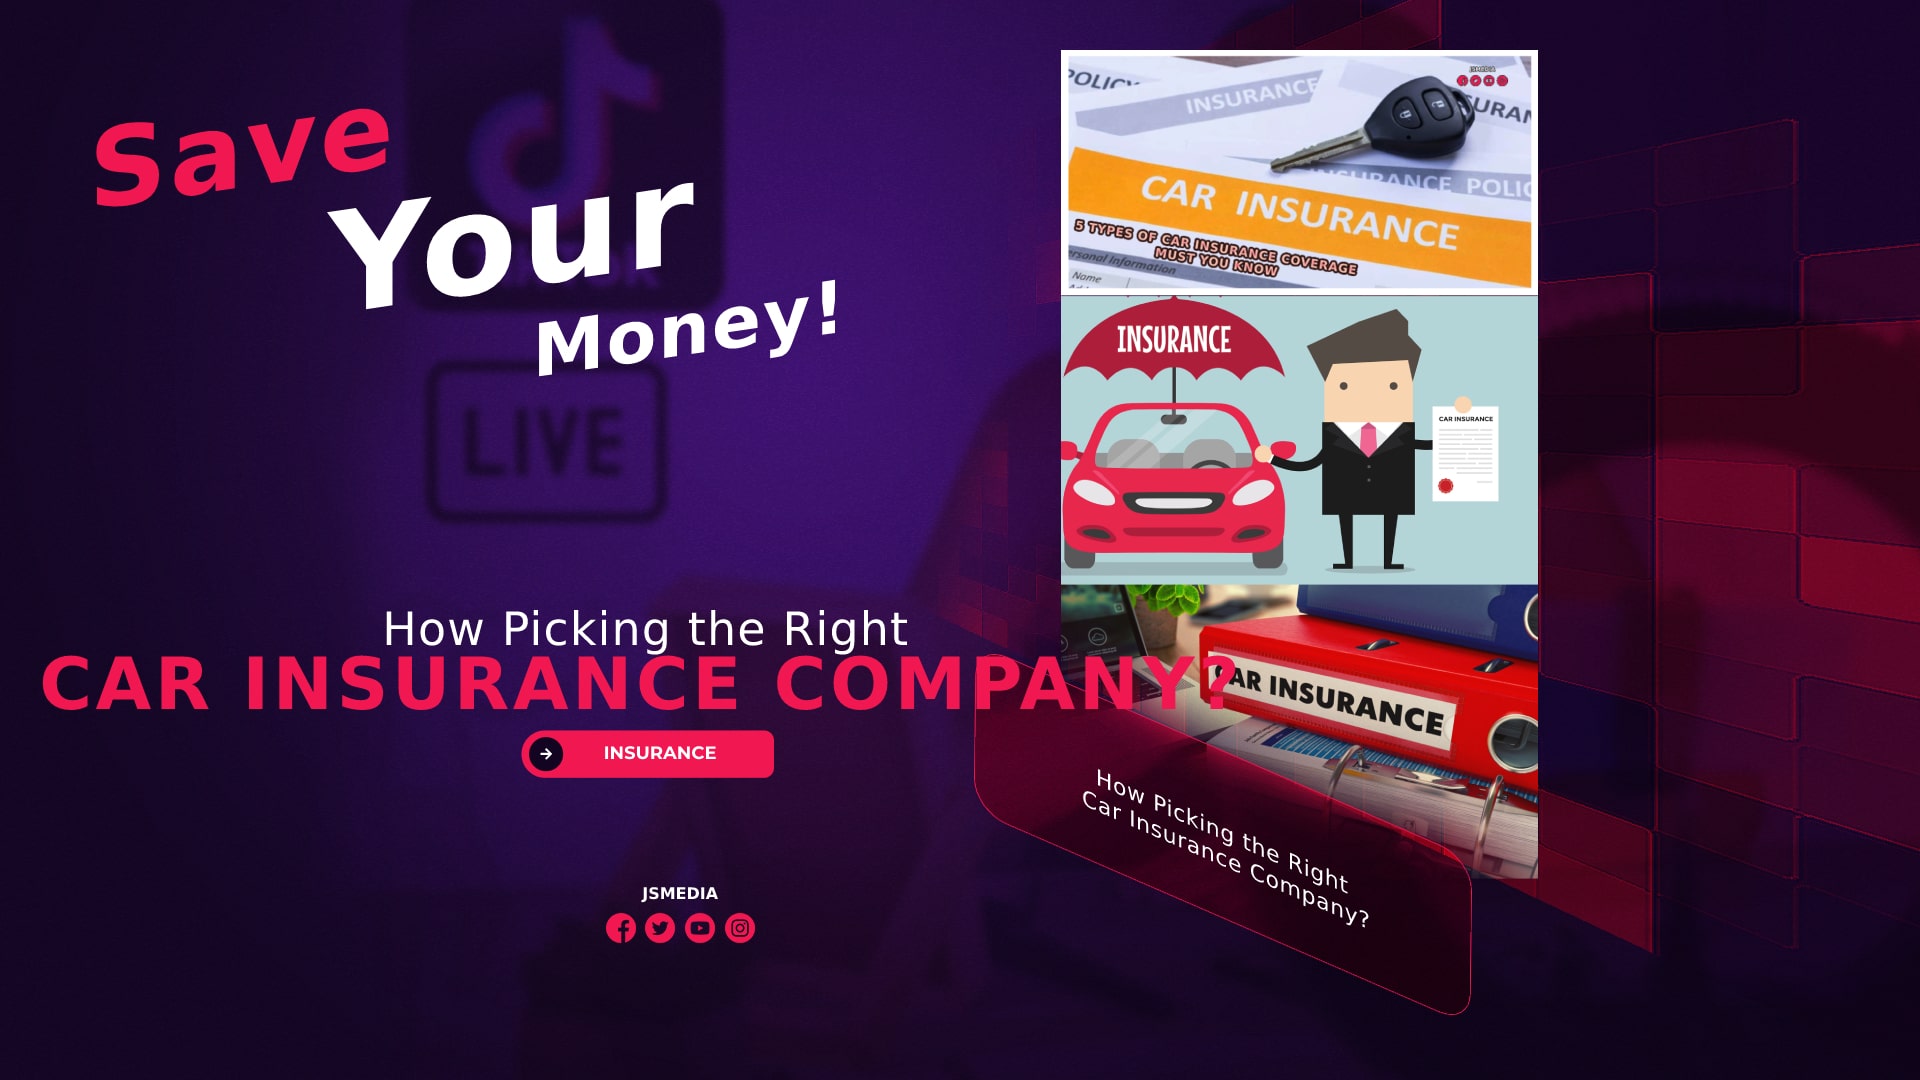 Auto Insurance - How Picking the Right Car Insurance Company?